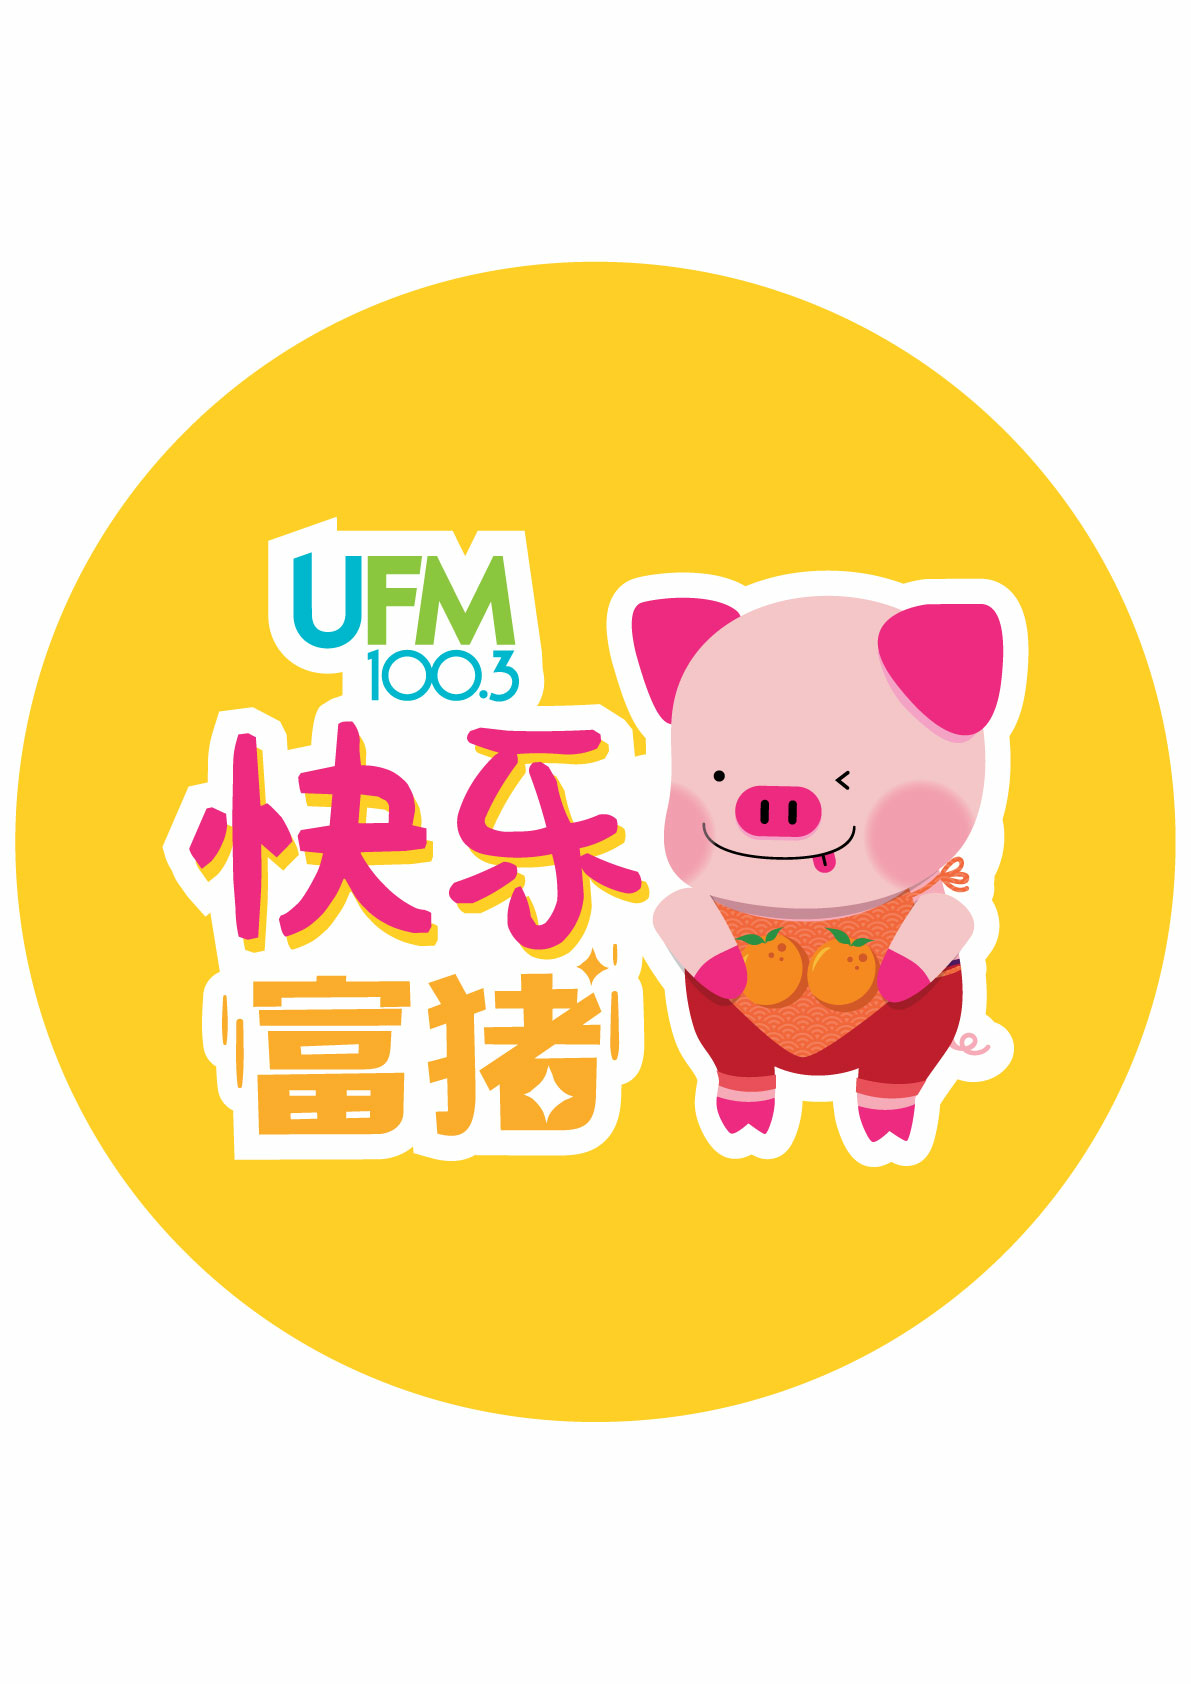 UFM100.3 DJ  新年歌 《快乐富猪》(2019) CNY Song " Happy Piggy"